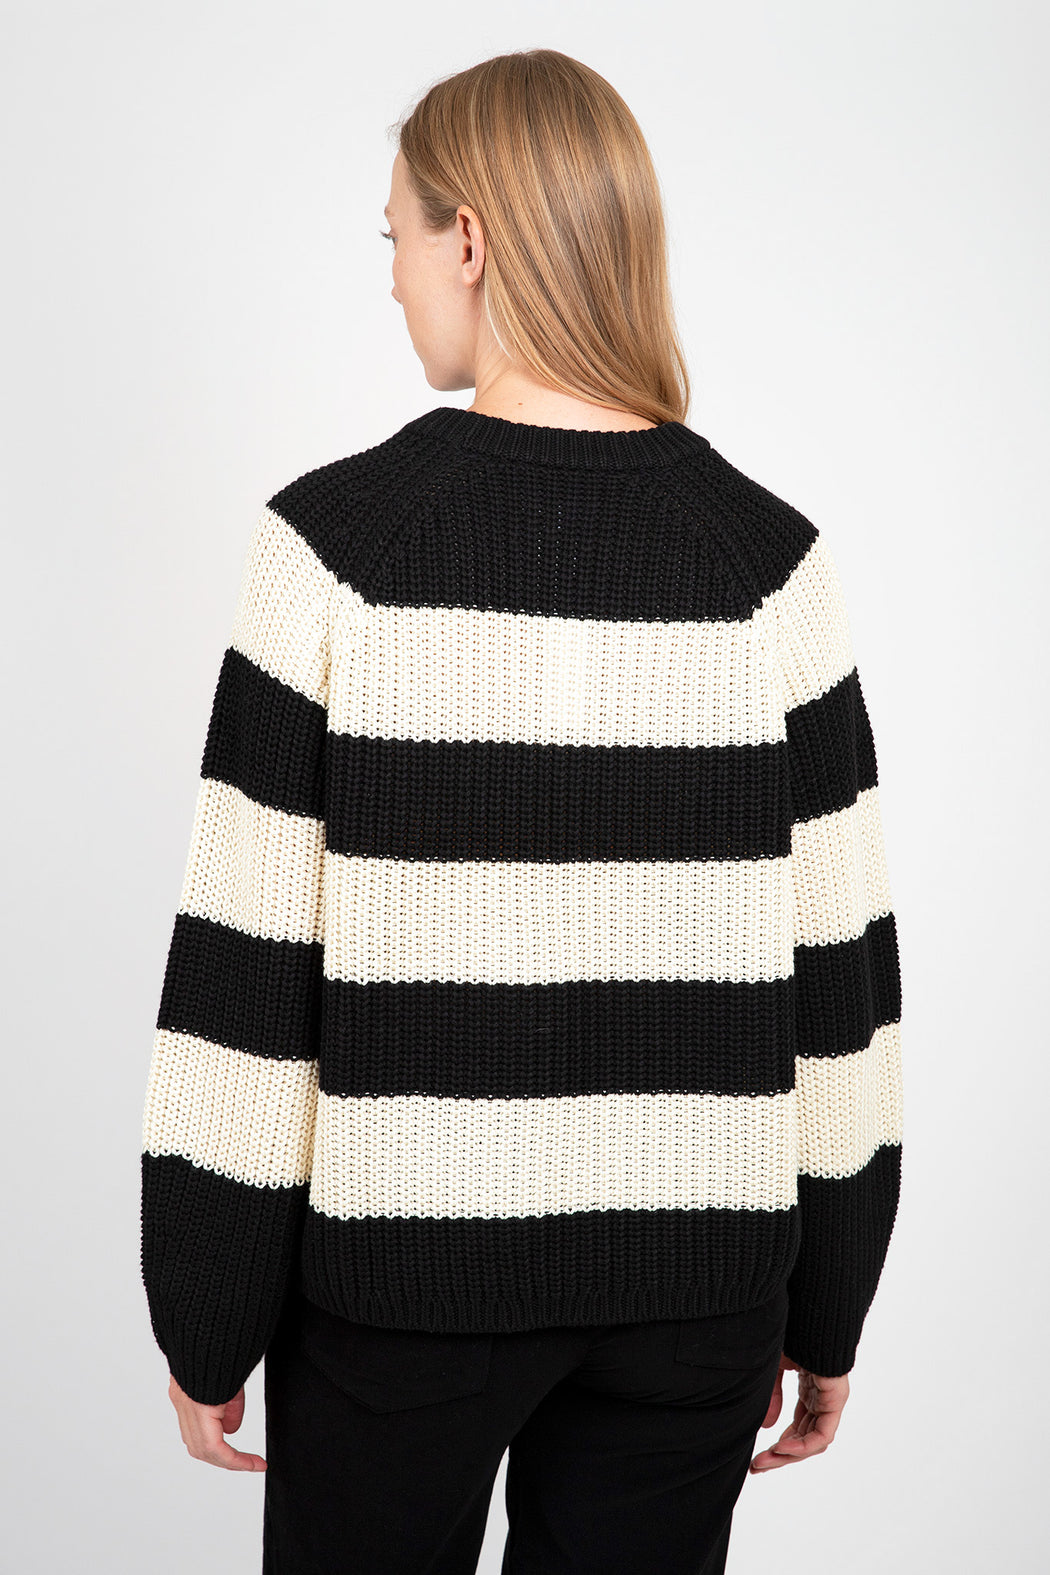    Velvet-Ciara-Striped-Crew-Neck-Sweater-Black-Ivory